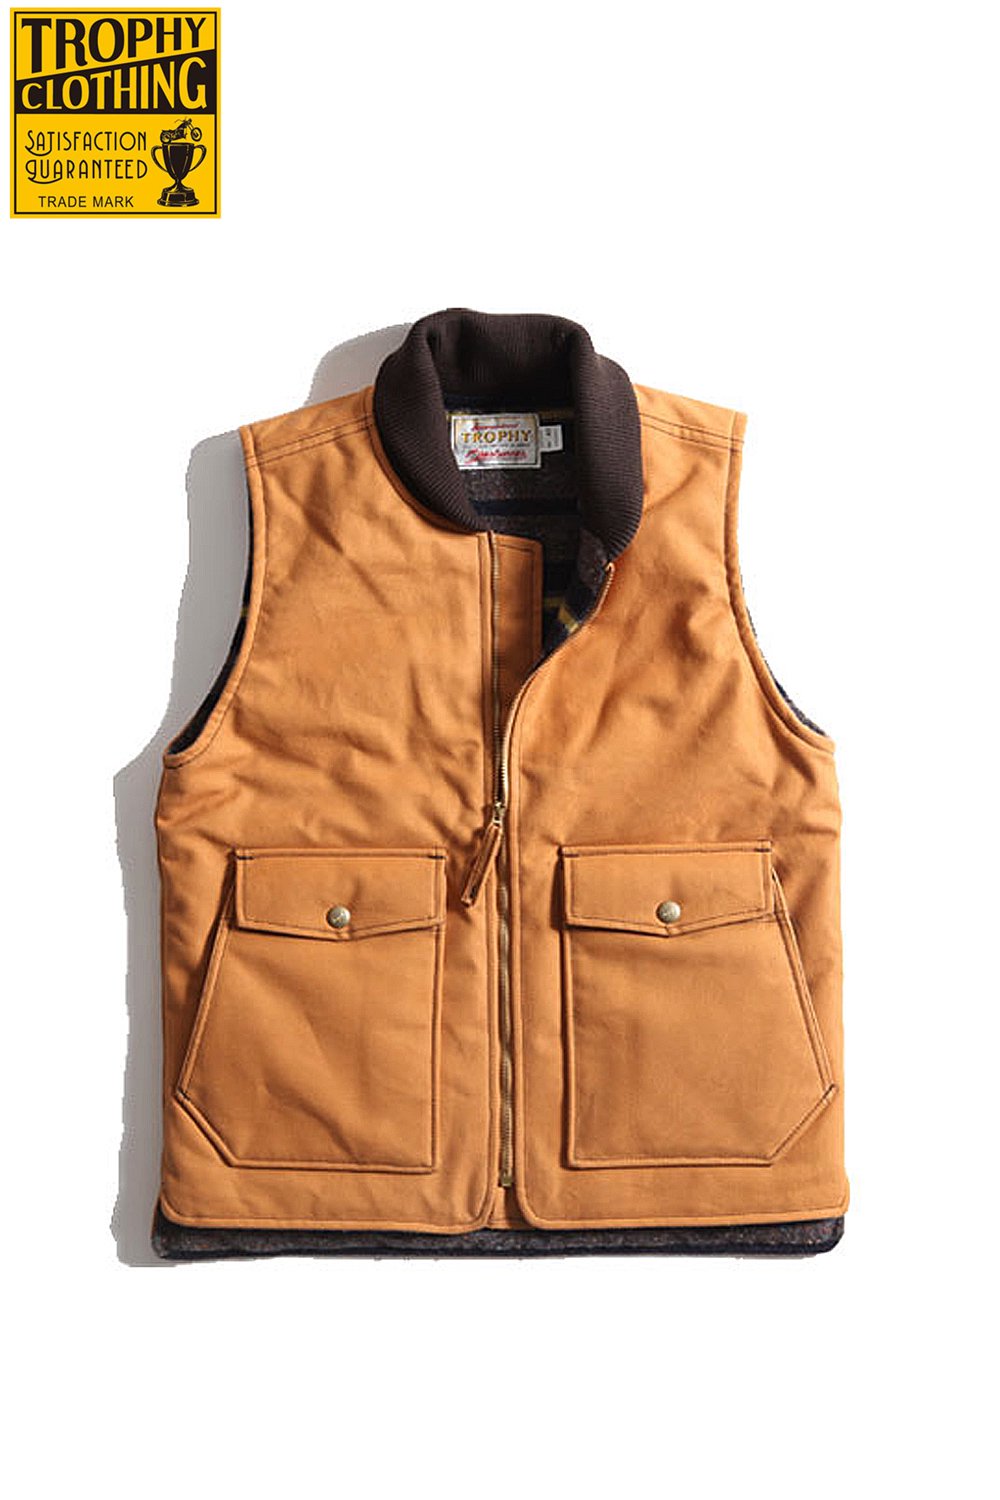 TROPHY CLOTHING(トロフィークロージング) ストームベスト Storm Vest 